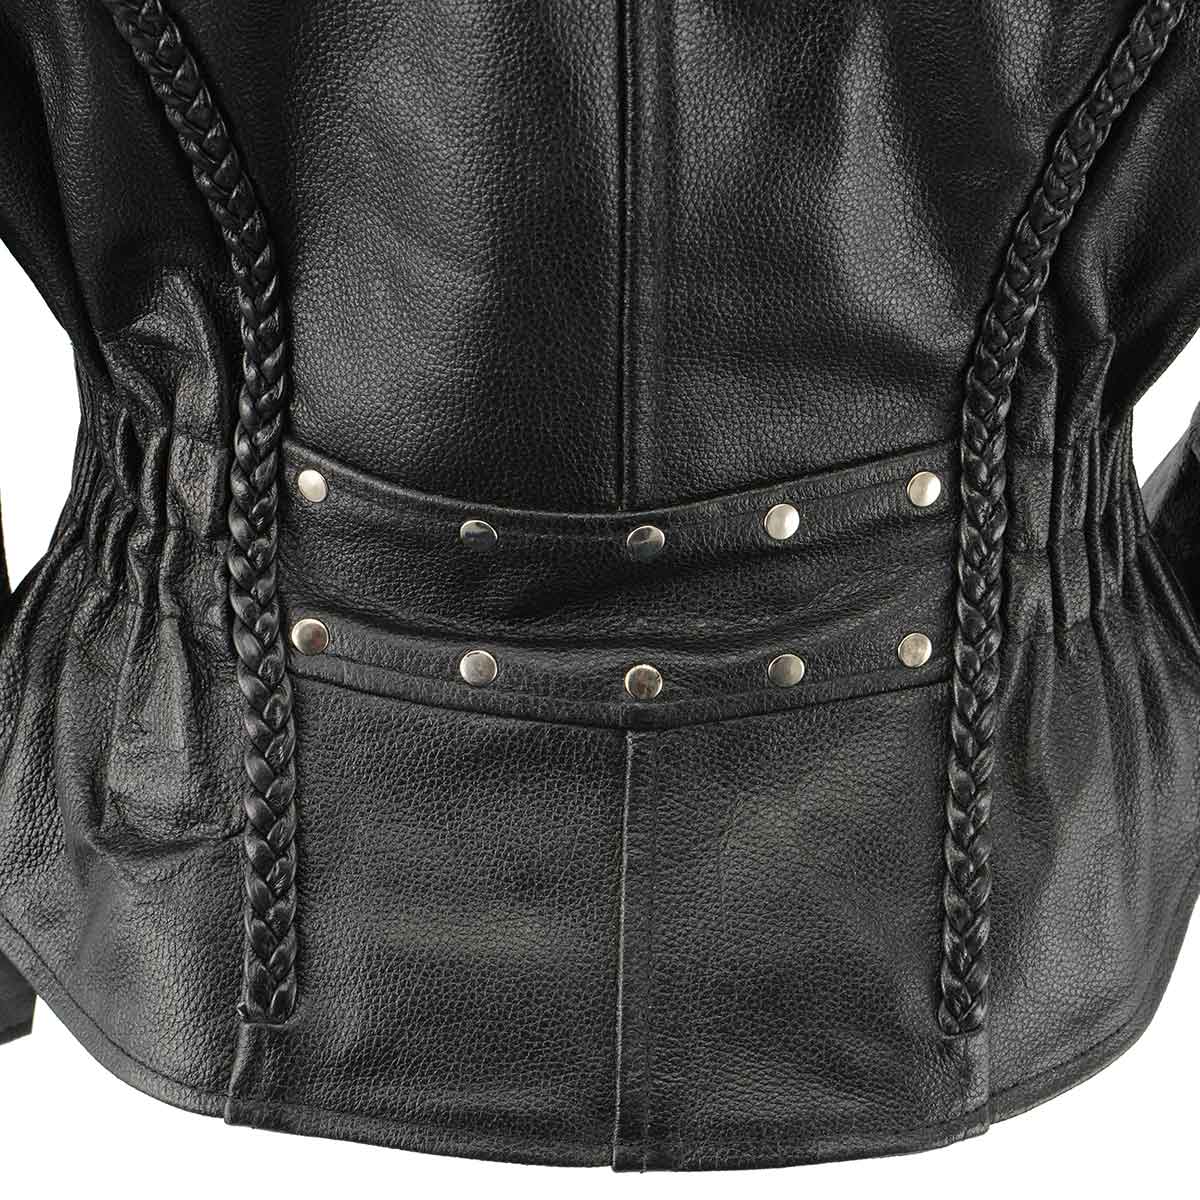 Milwaukee Leather SH7013 Women's Black 'Braided' Motorcycle Leather Jacket